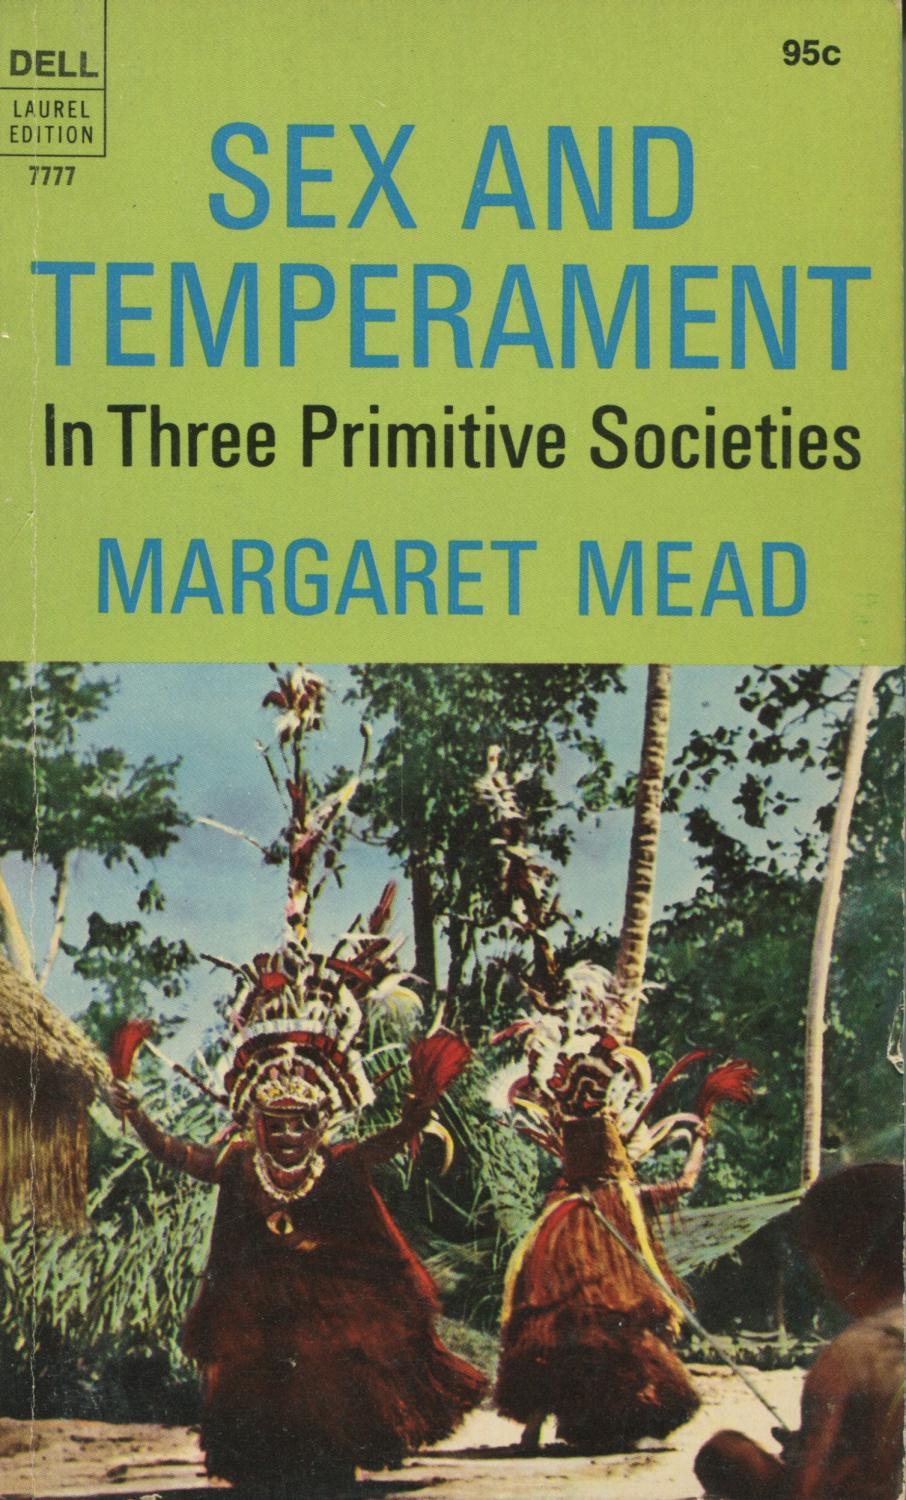 Sex and temperament in three primitive societies